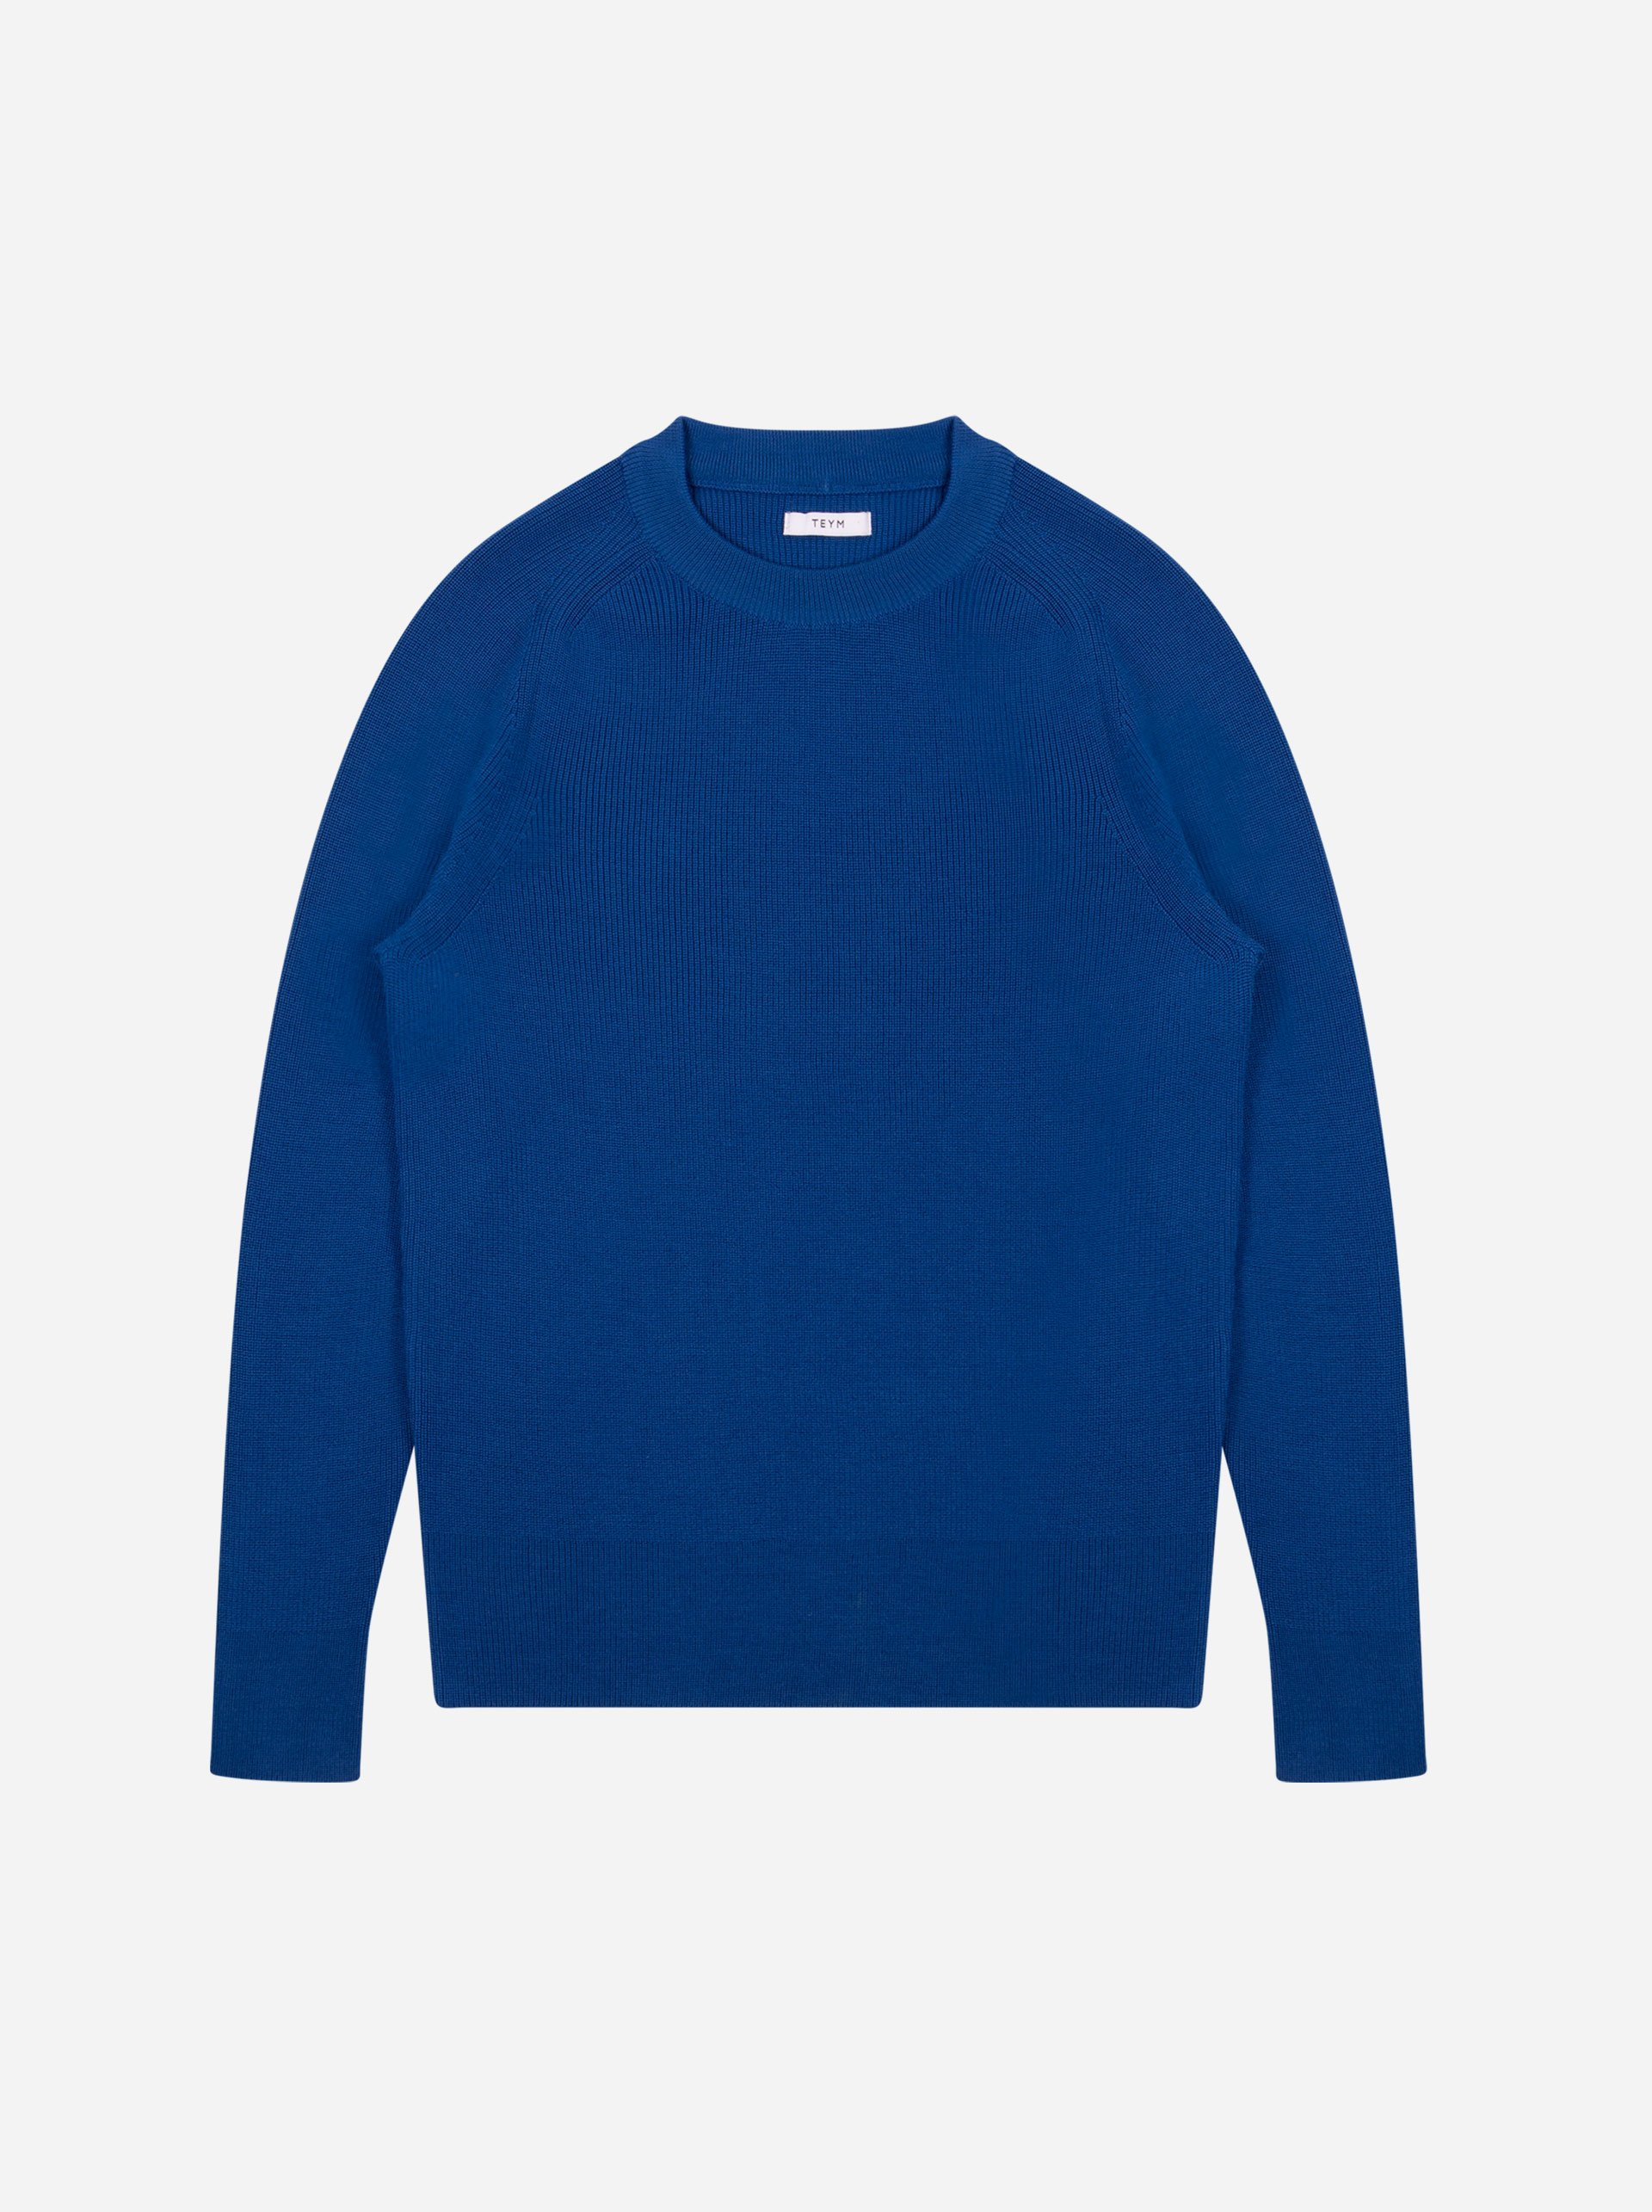 Teym - Crewneck - The Merino Sweater - Men - Cobalt blue - 4